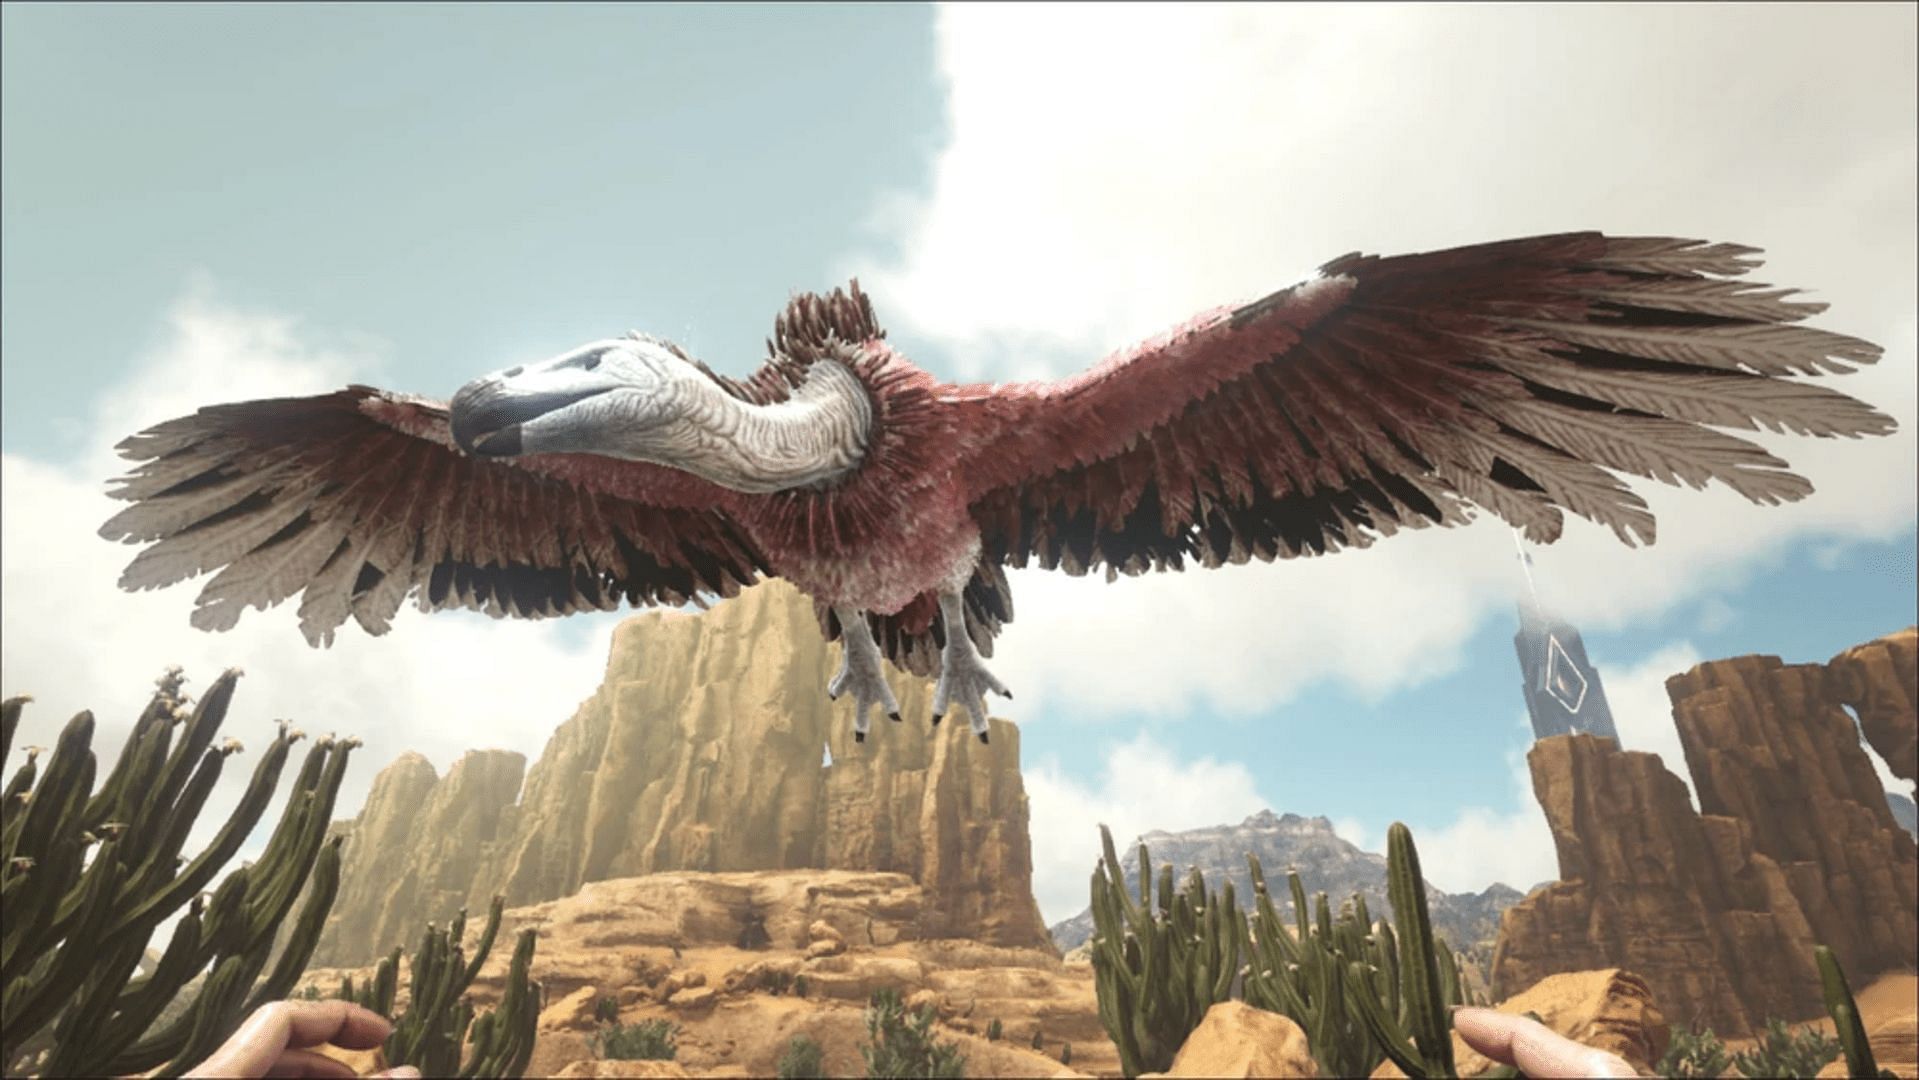 Vultures are weapons of destruction (Image via Ark Fandom Wiki)